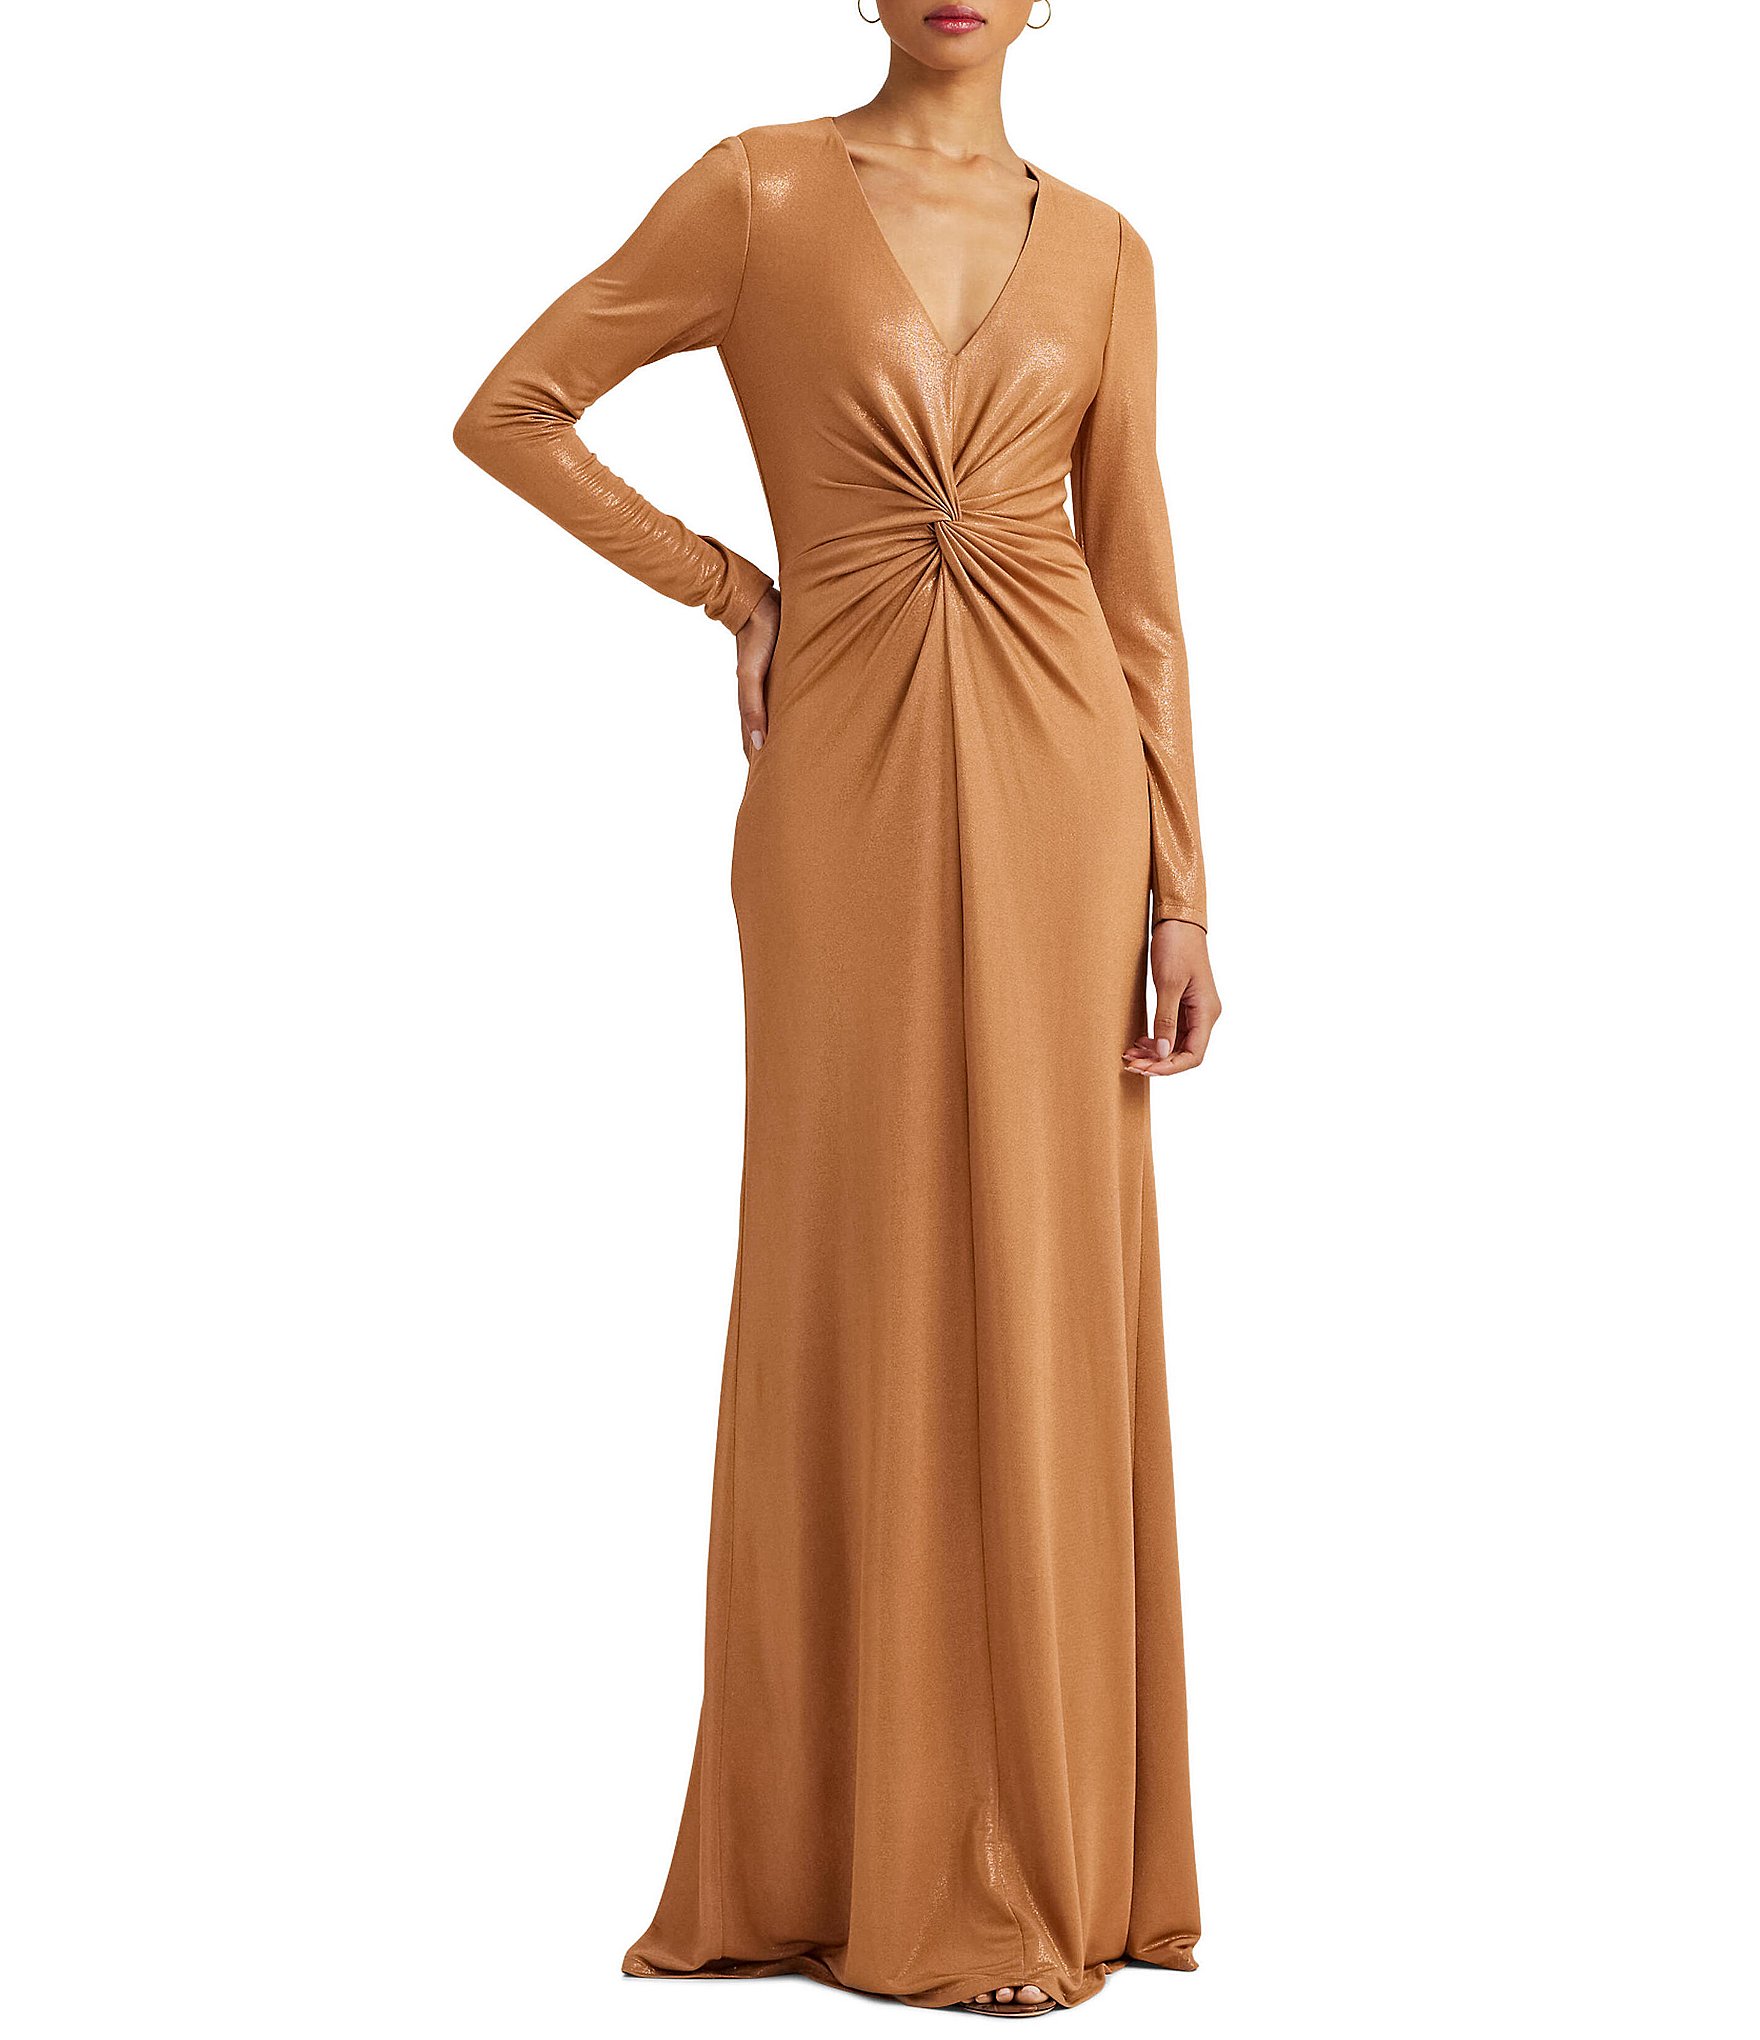 black and gold dress: Women's Formal Dresses & Evening Gowns | Dillard's